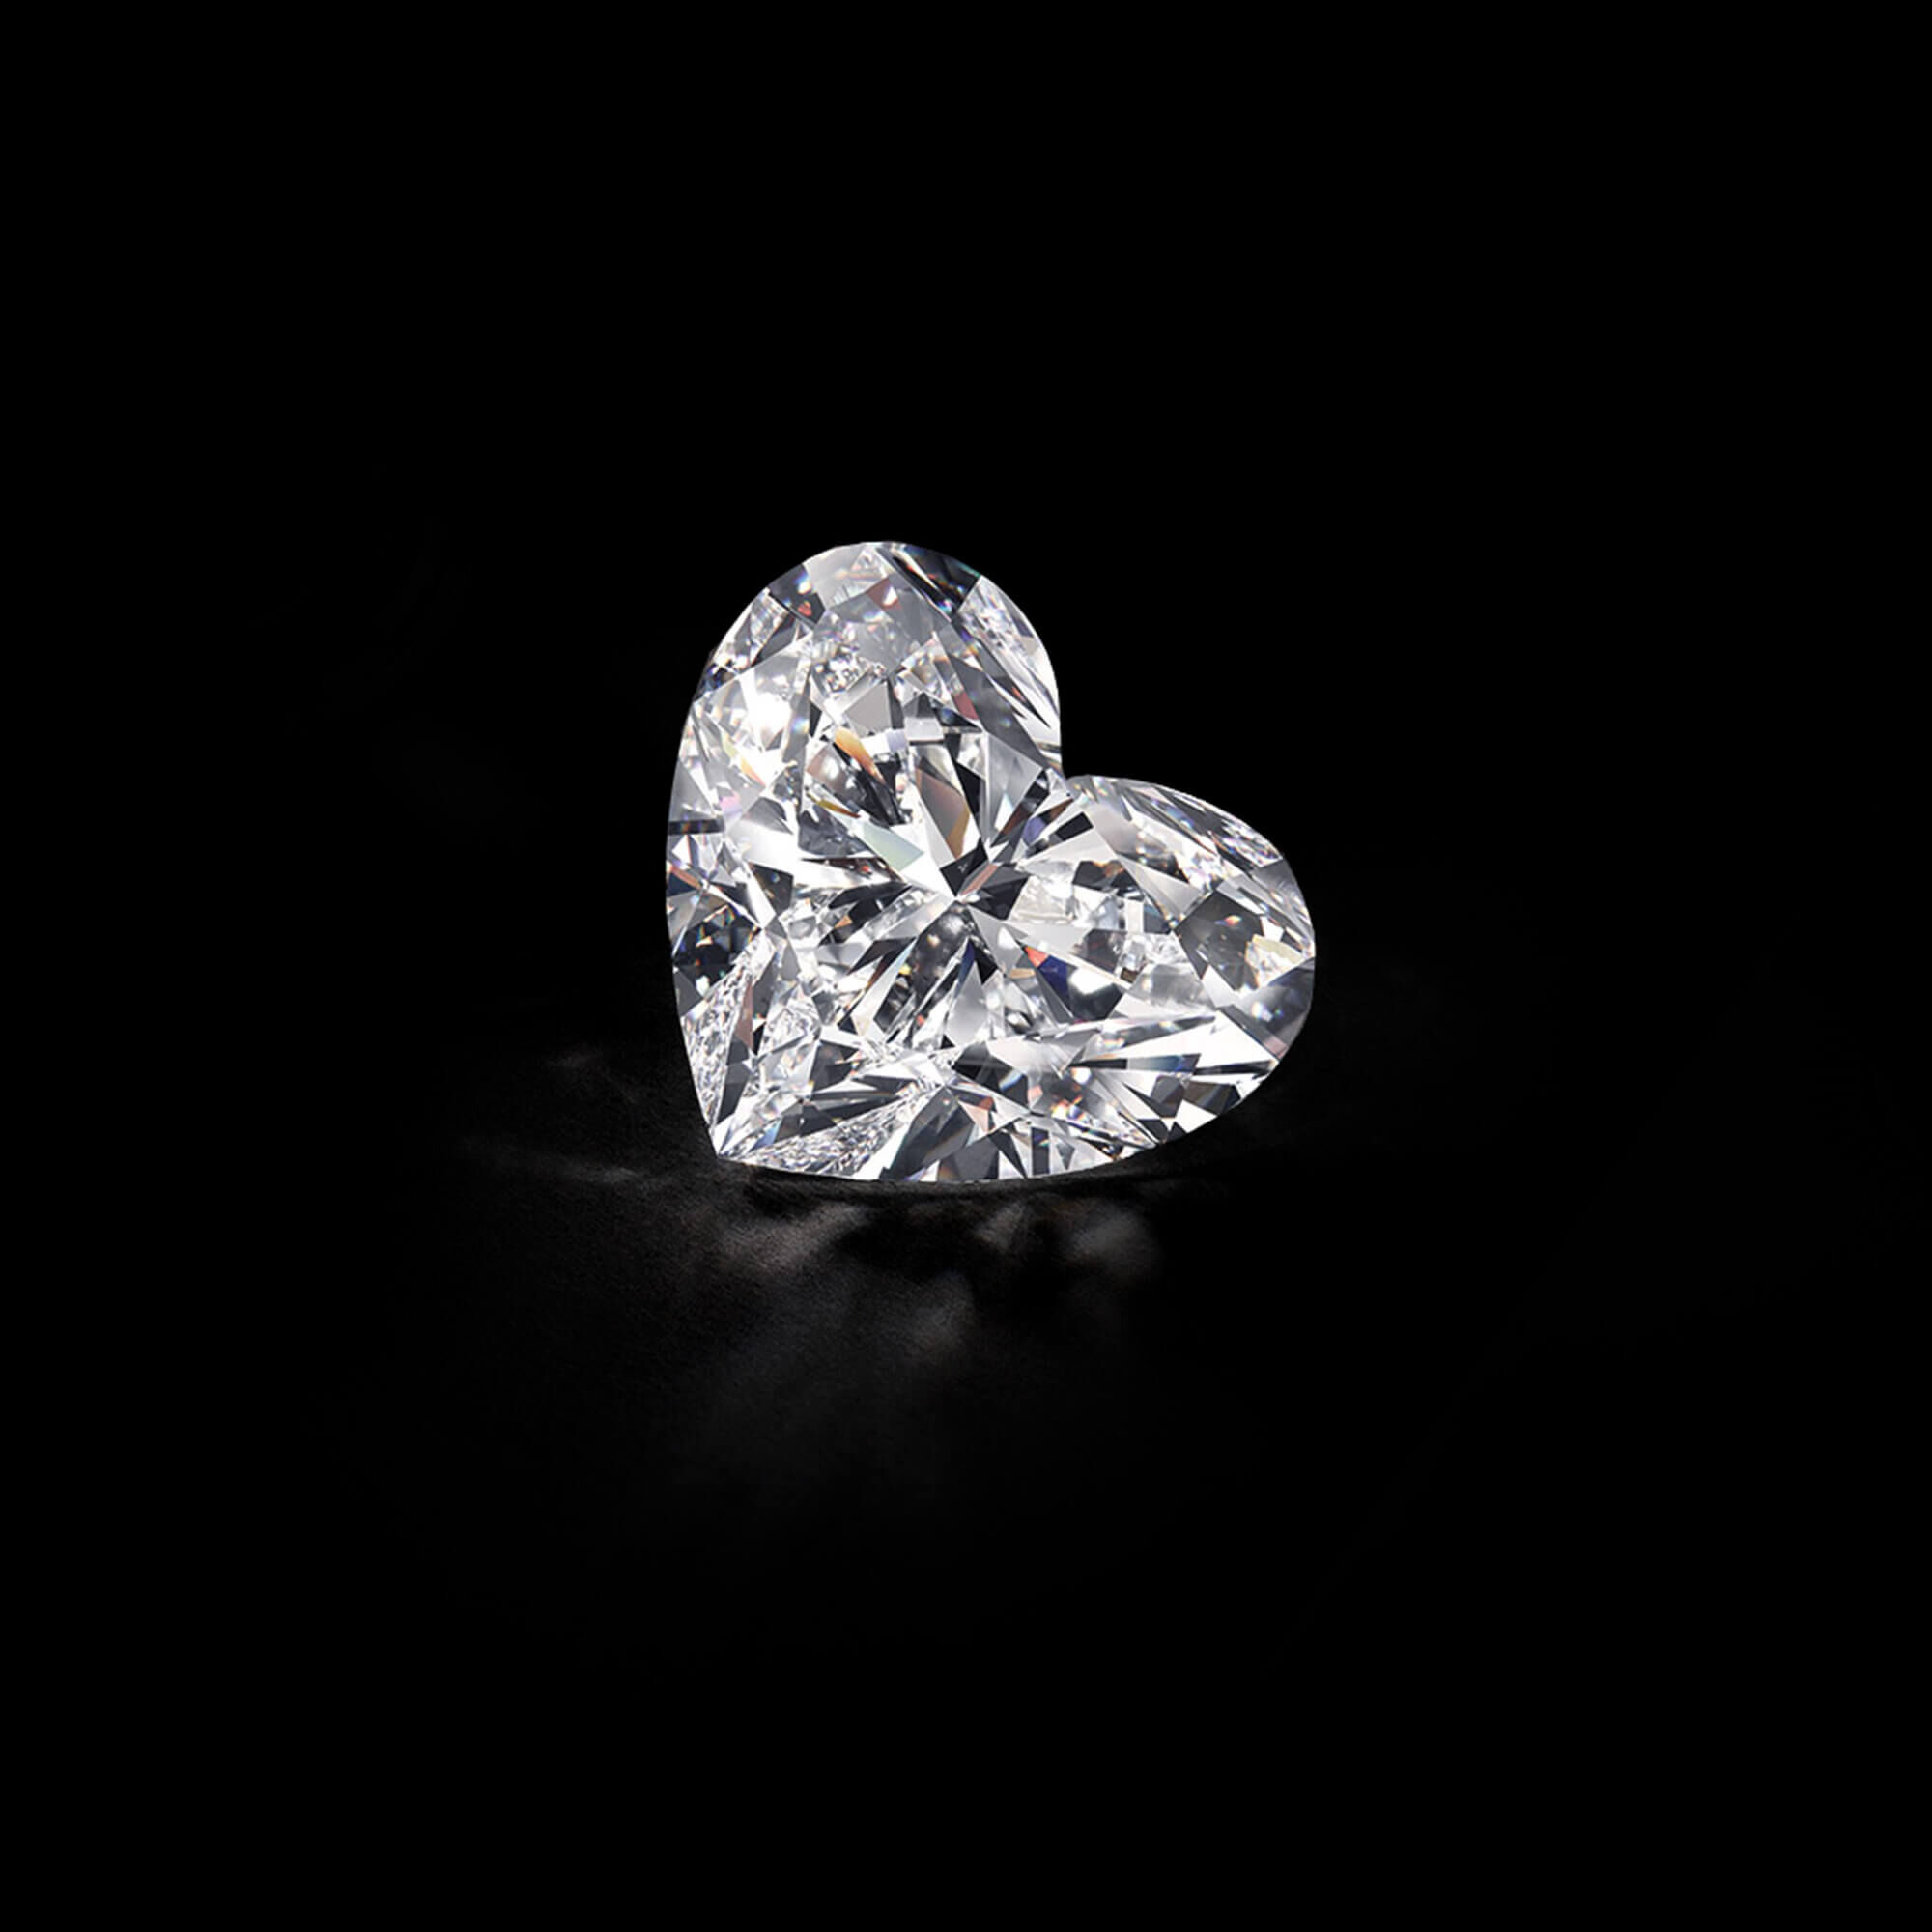 The Graff Venus, a 118.78 carat D Flawless heart shape diamond